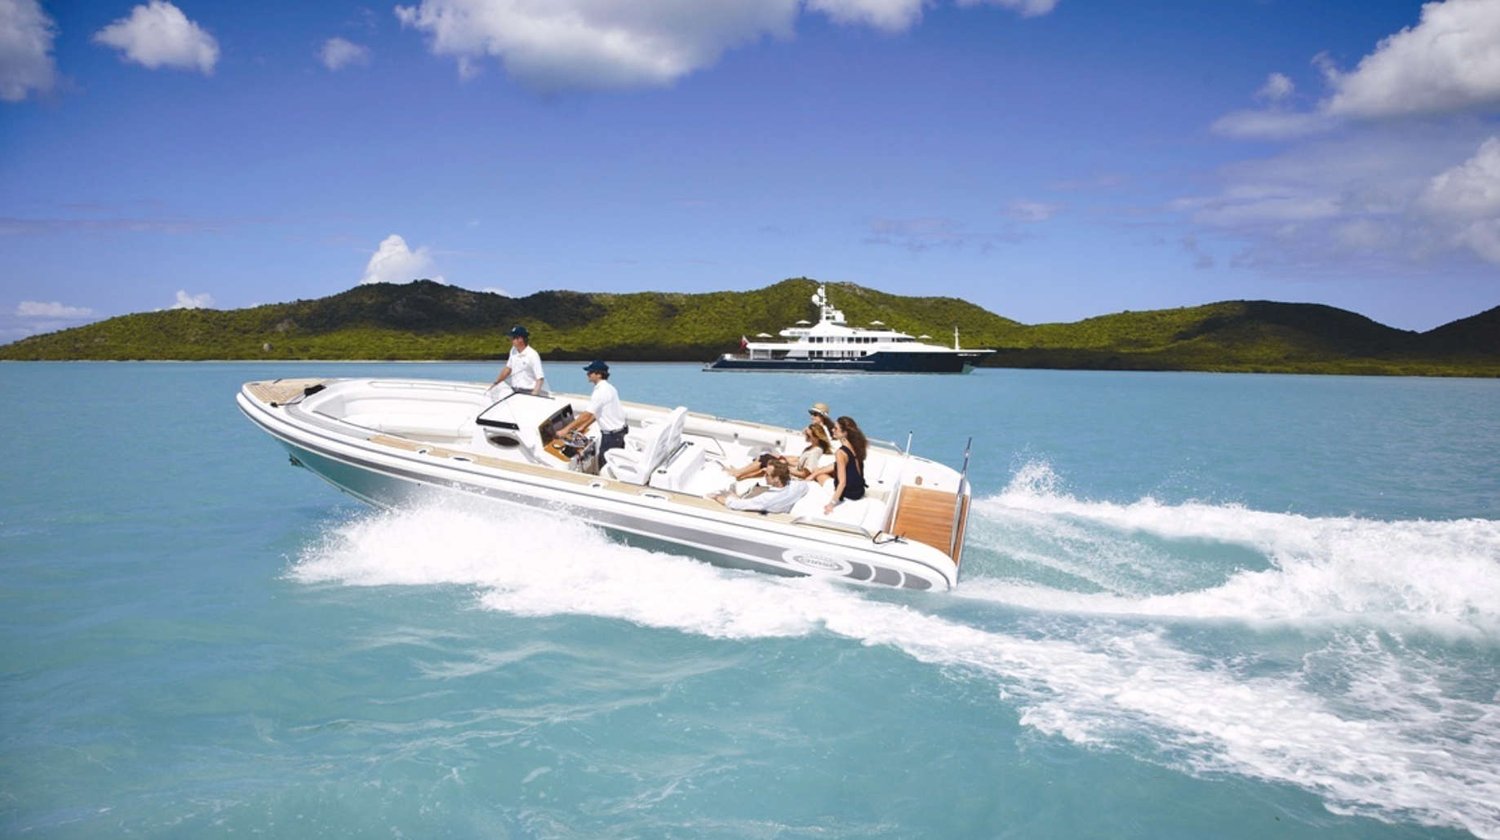 Luxury boat speeding through the ocean